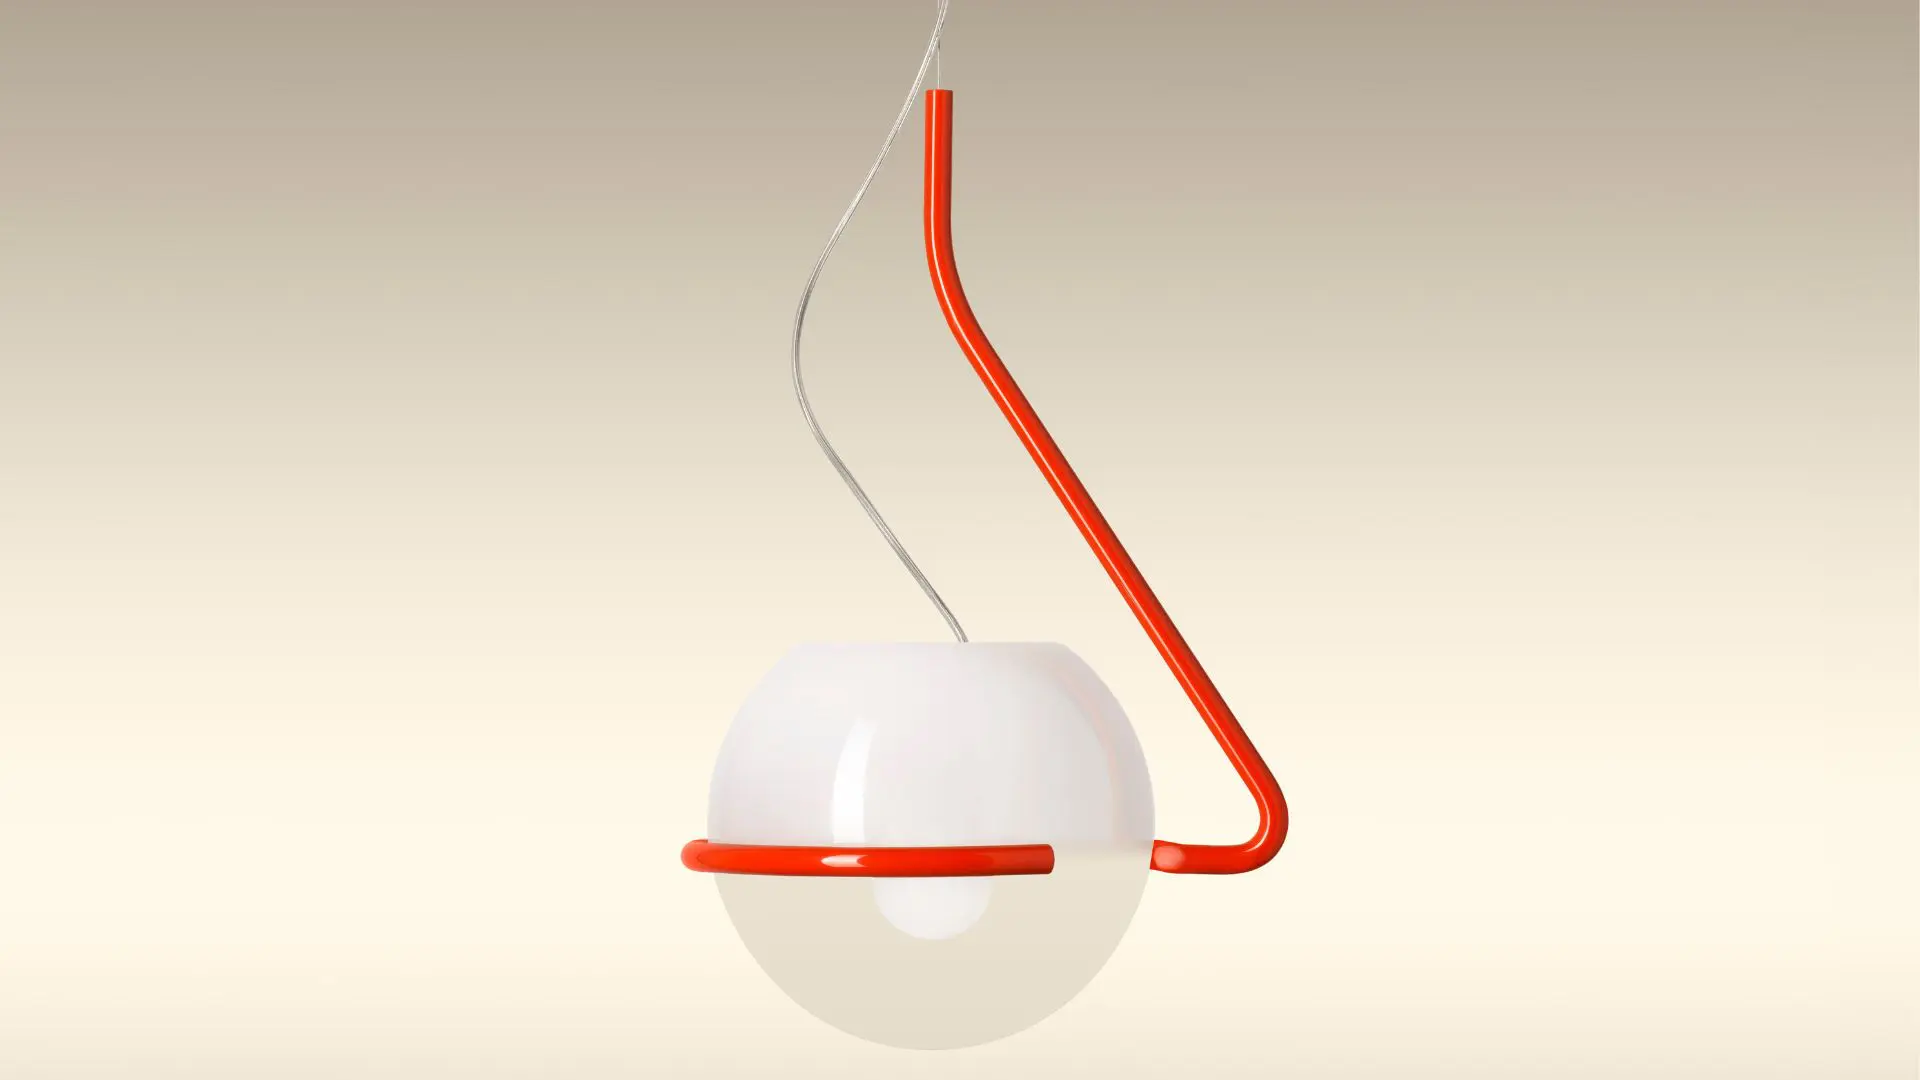 Tonda by Ferruccio Laviani for Foscarini _ a lamp as a careful balancing act